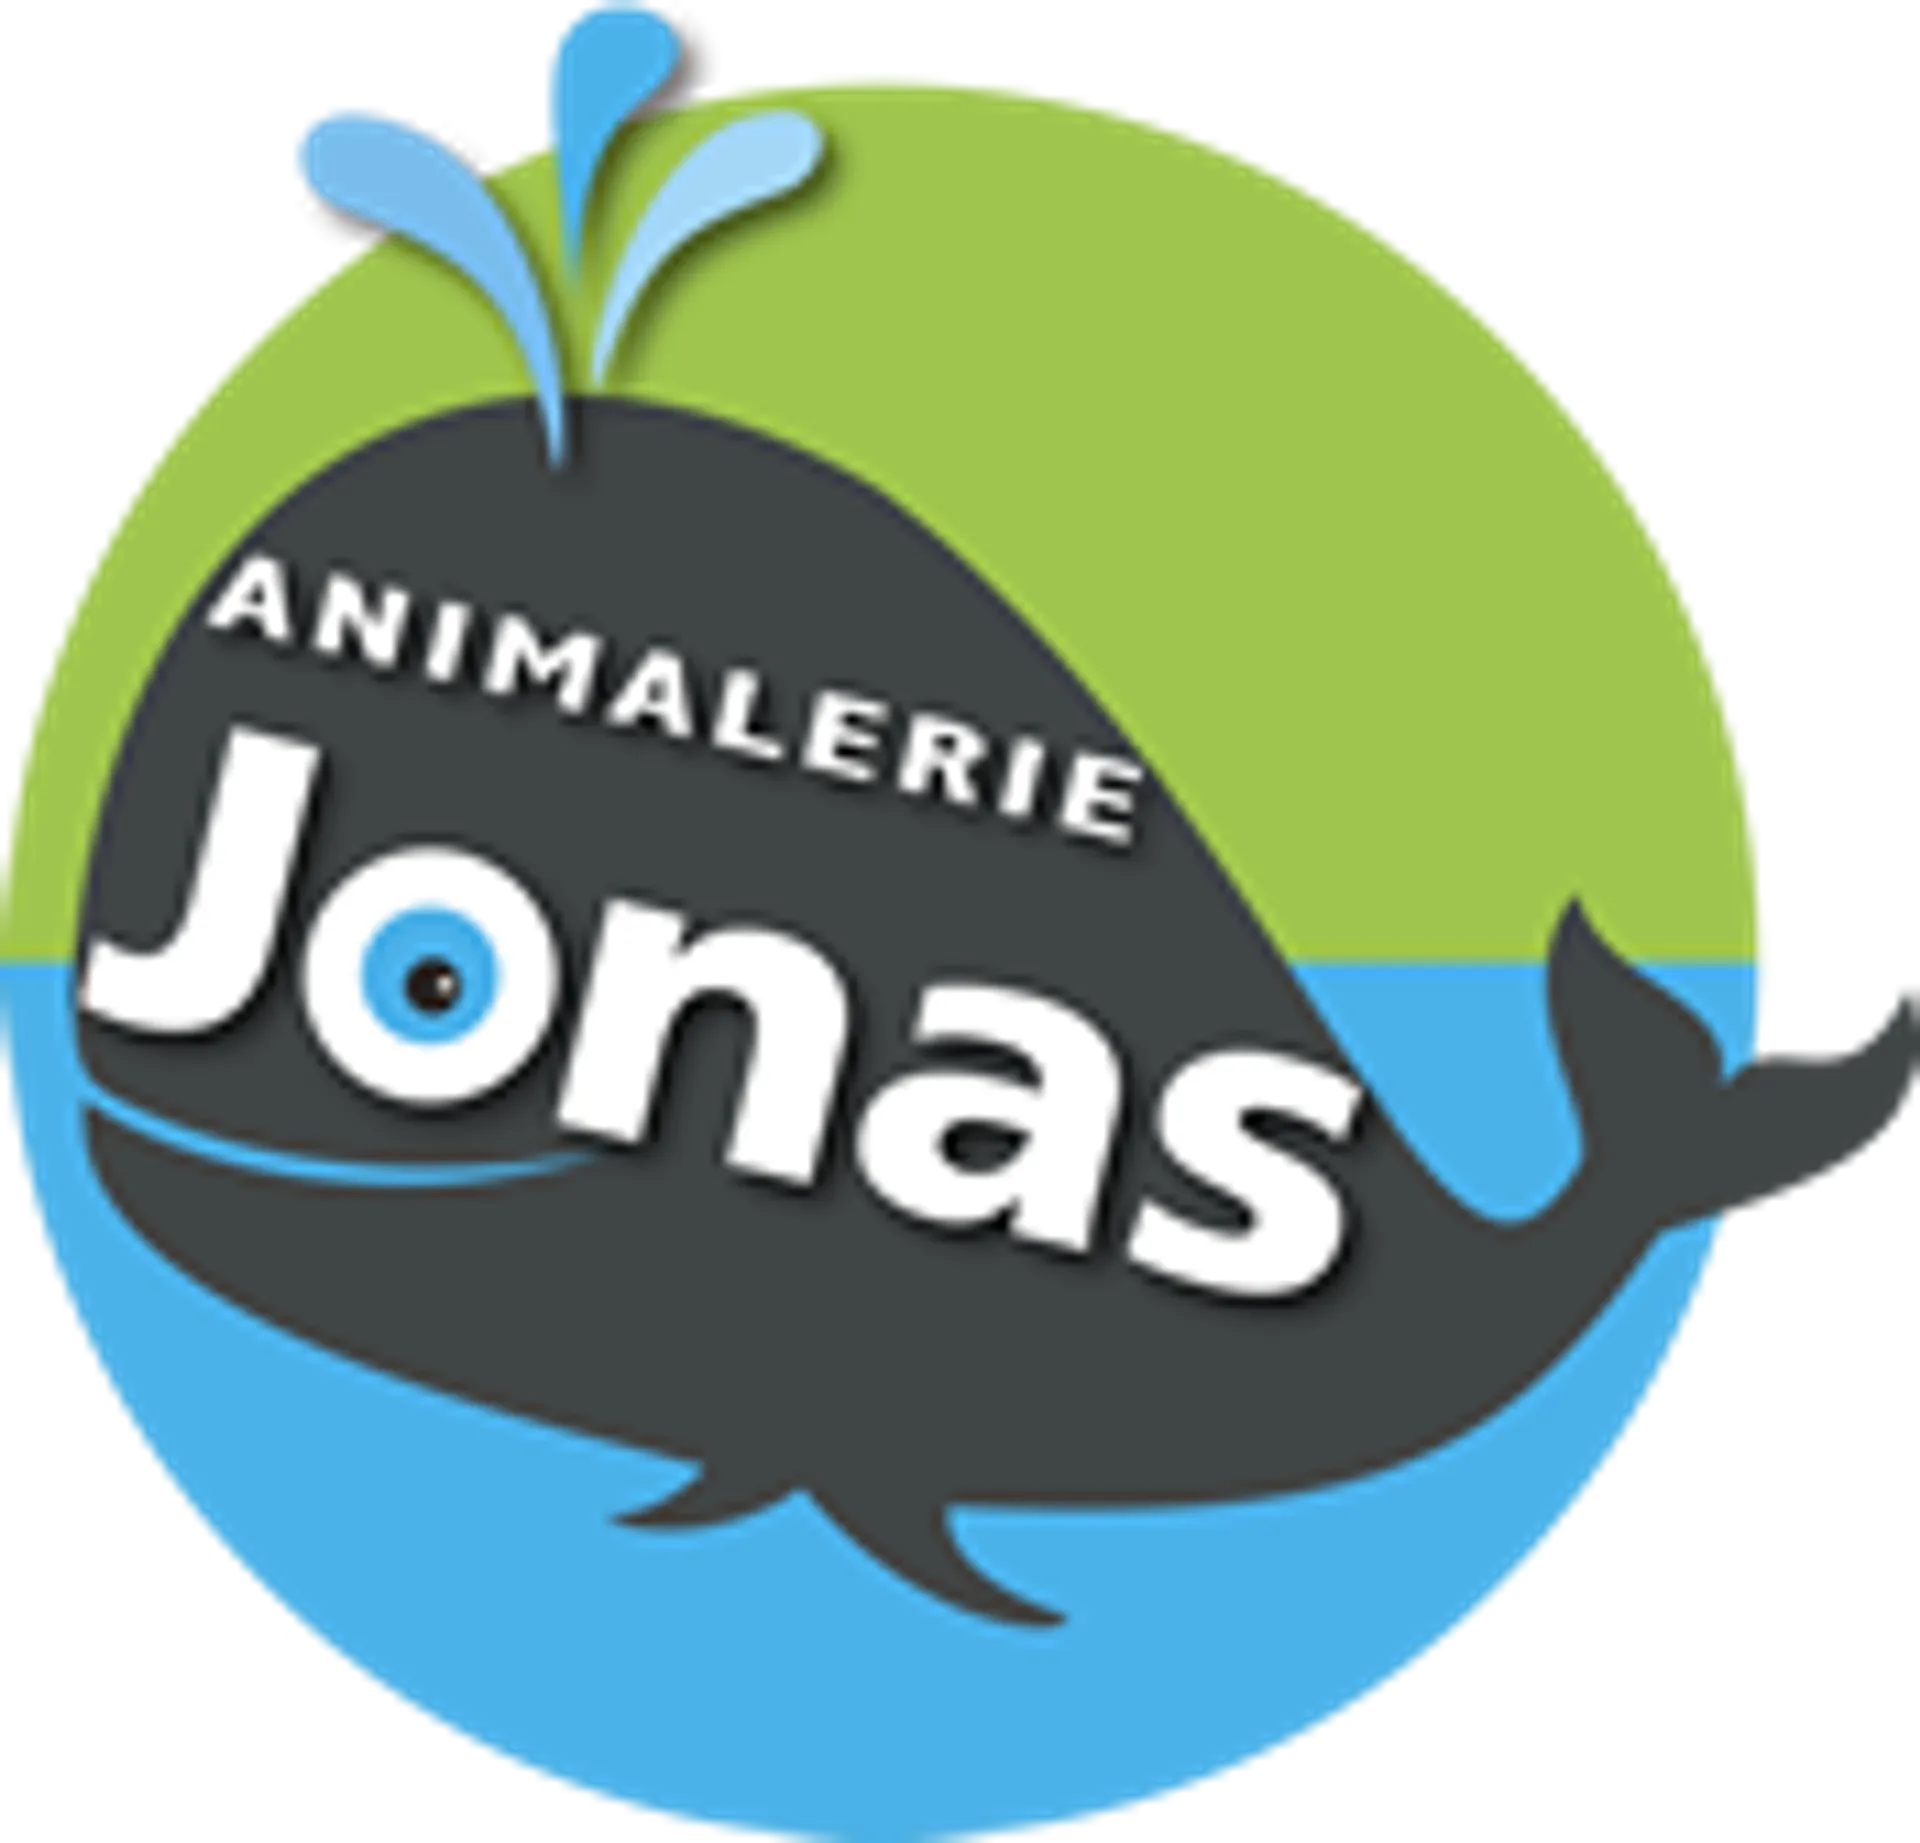 ANIMALERIE JONAS logo de circulaire